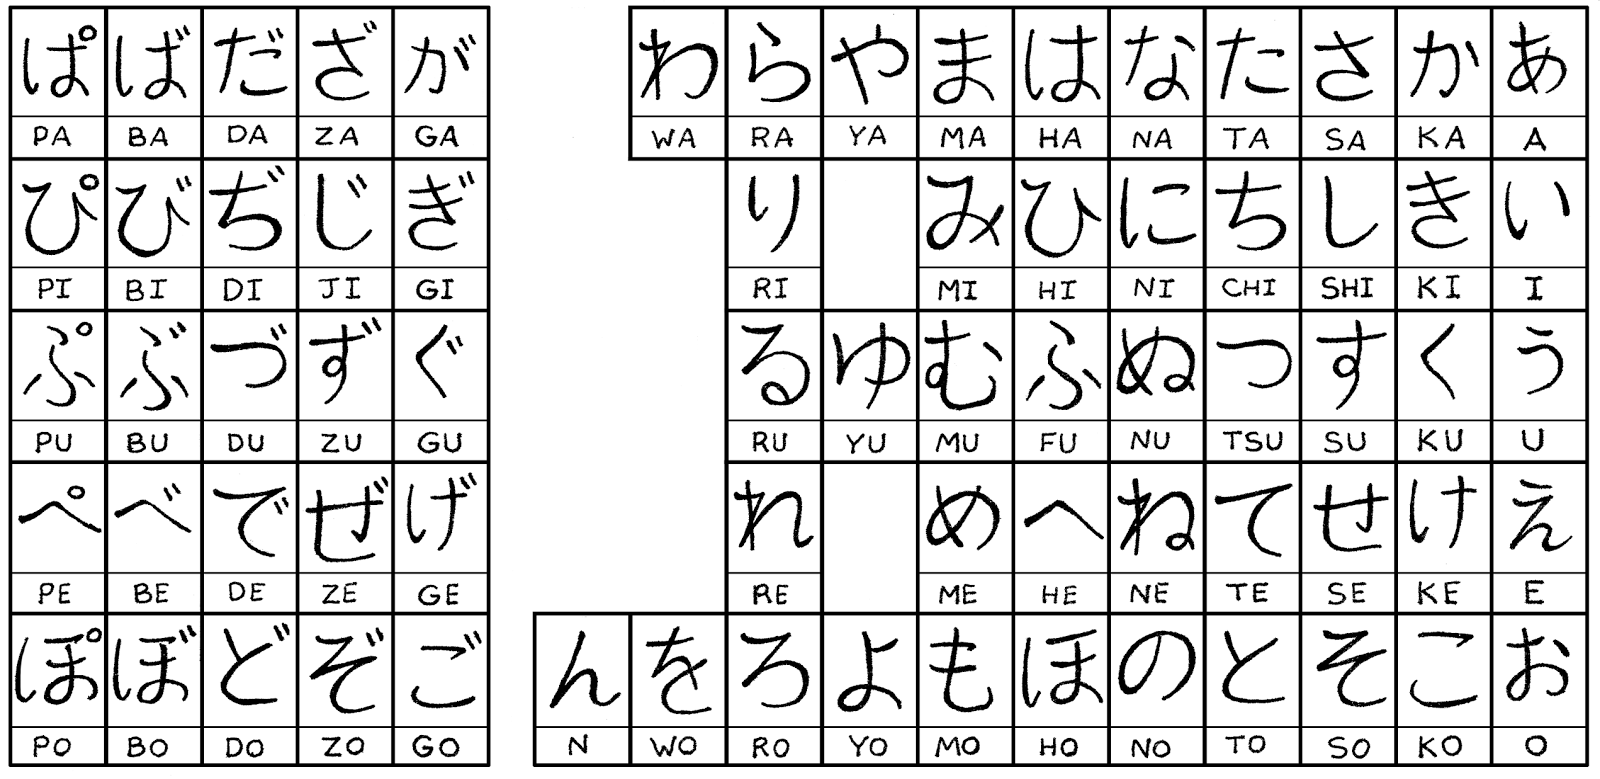 Япон хэлний хичээл / Japanese Lesson / 日本語の授業 : About Japanese alphabet